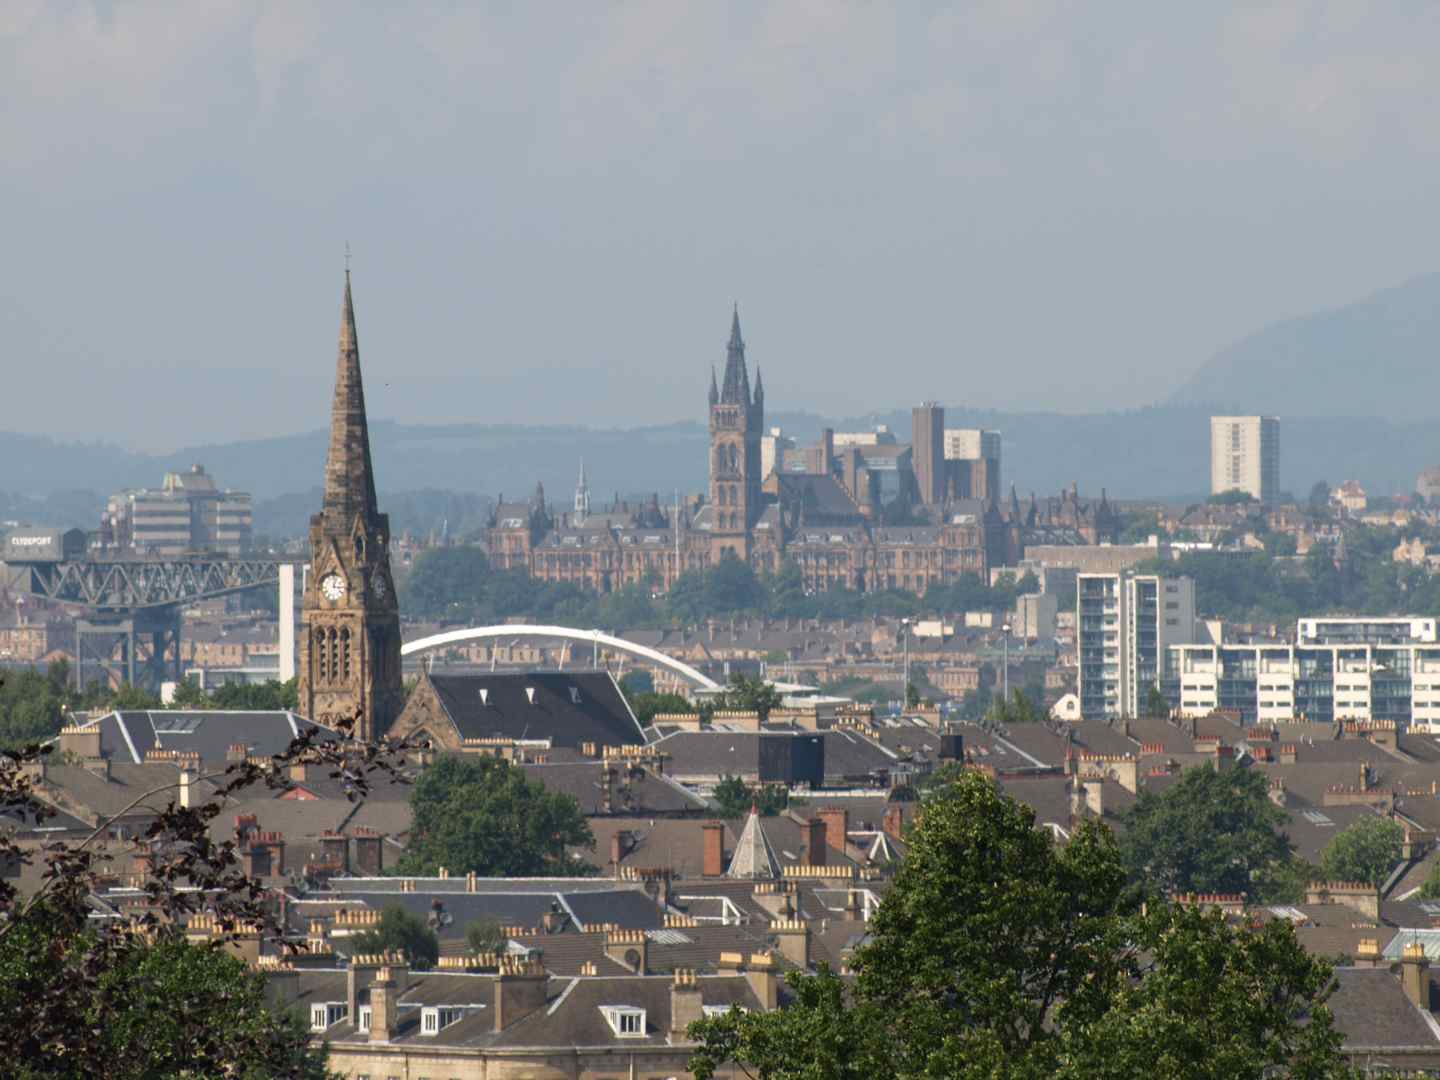 City of Glasgow